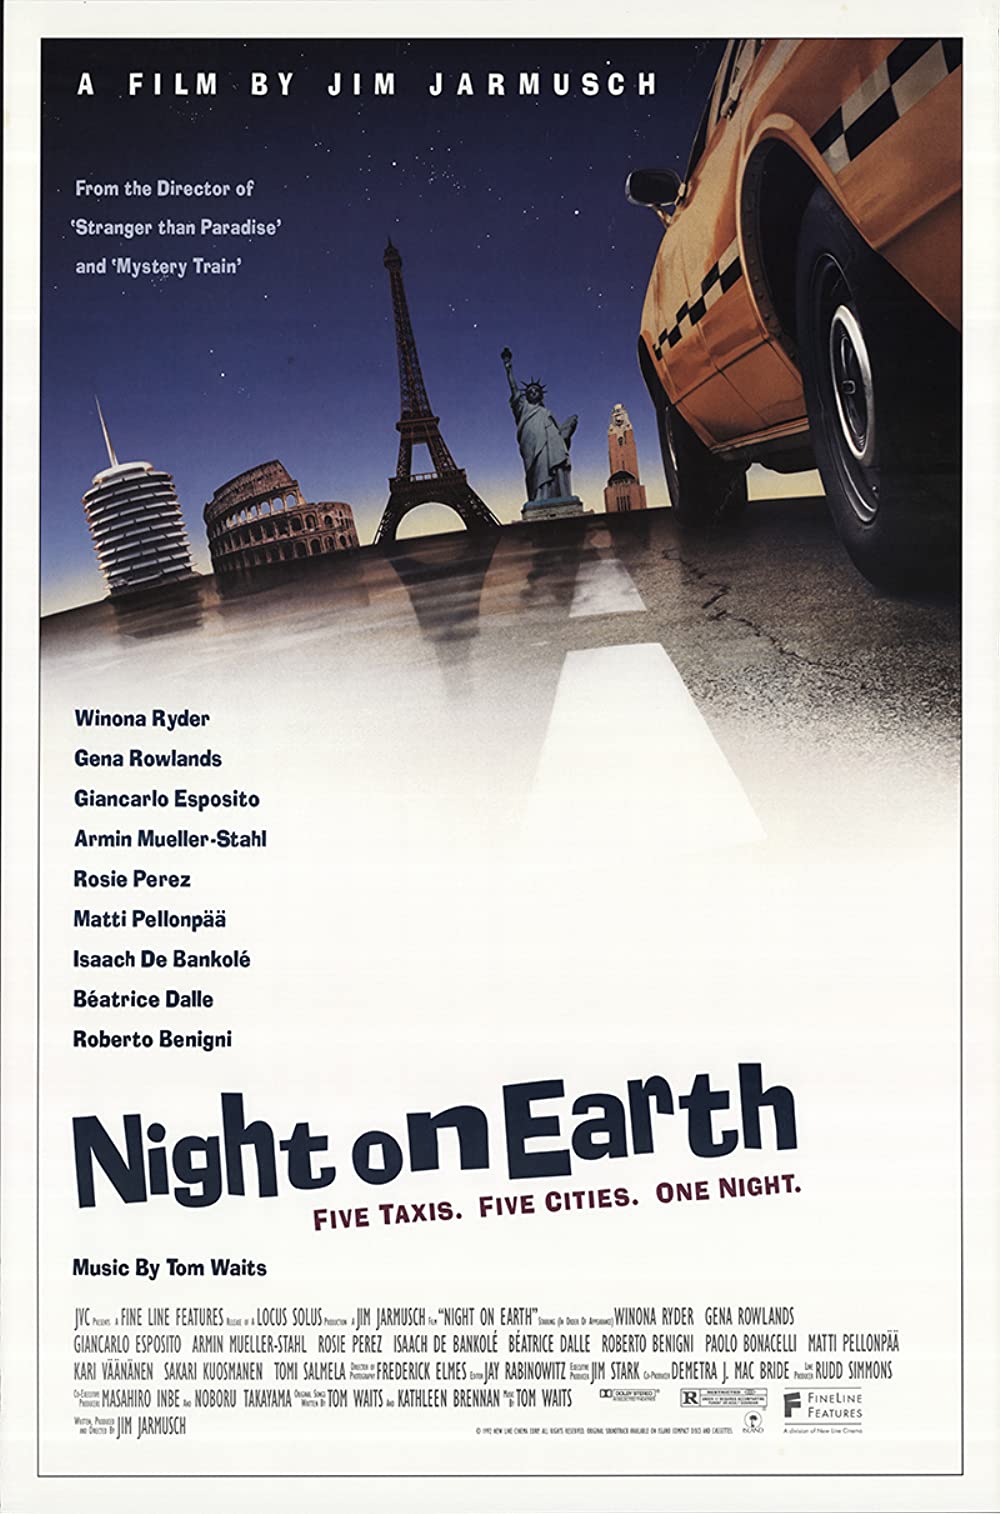 Filmbeschreibung zu Night on Earth